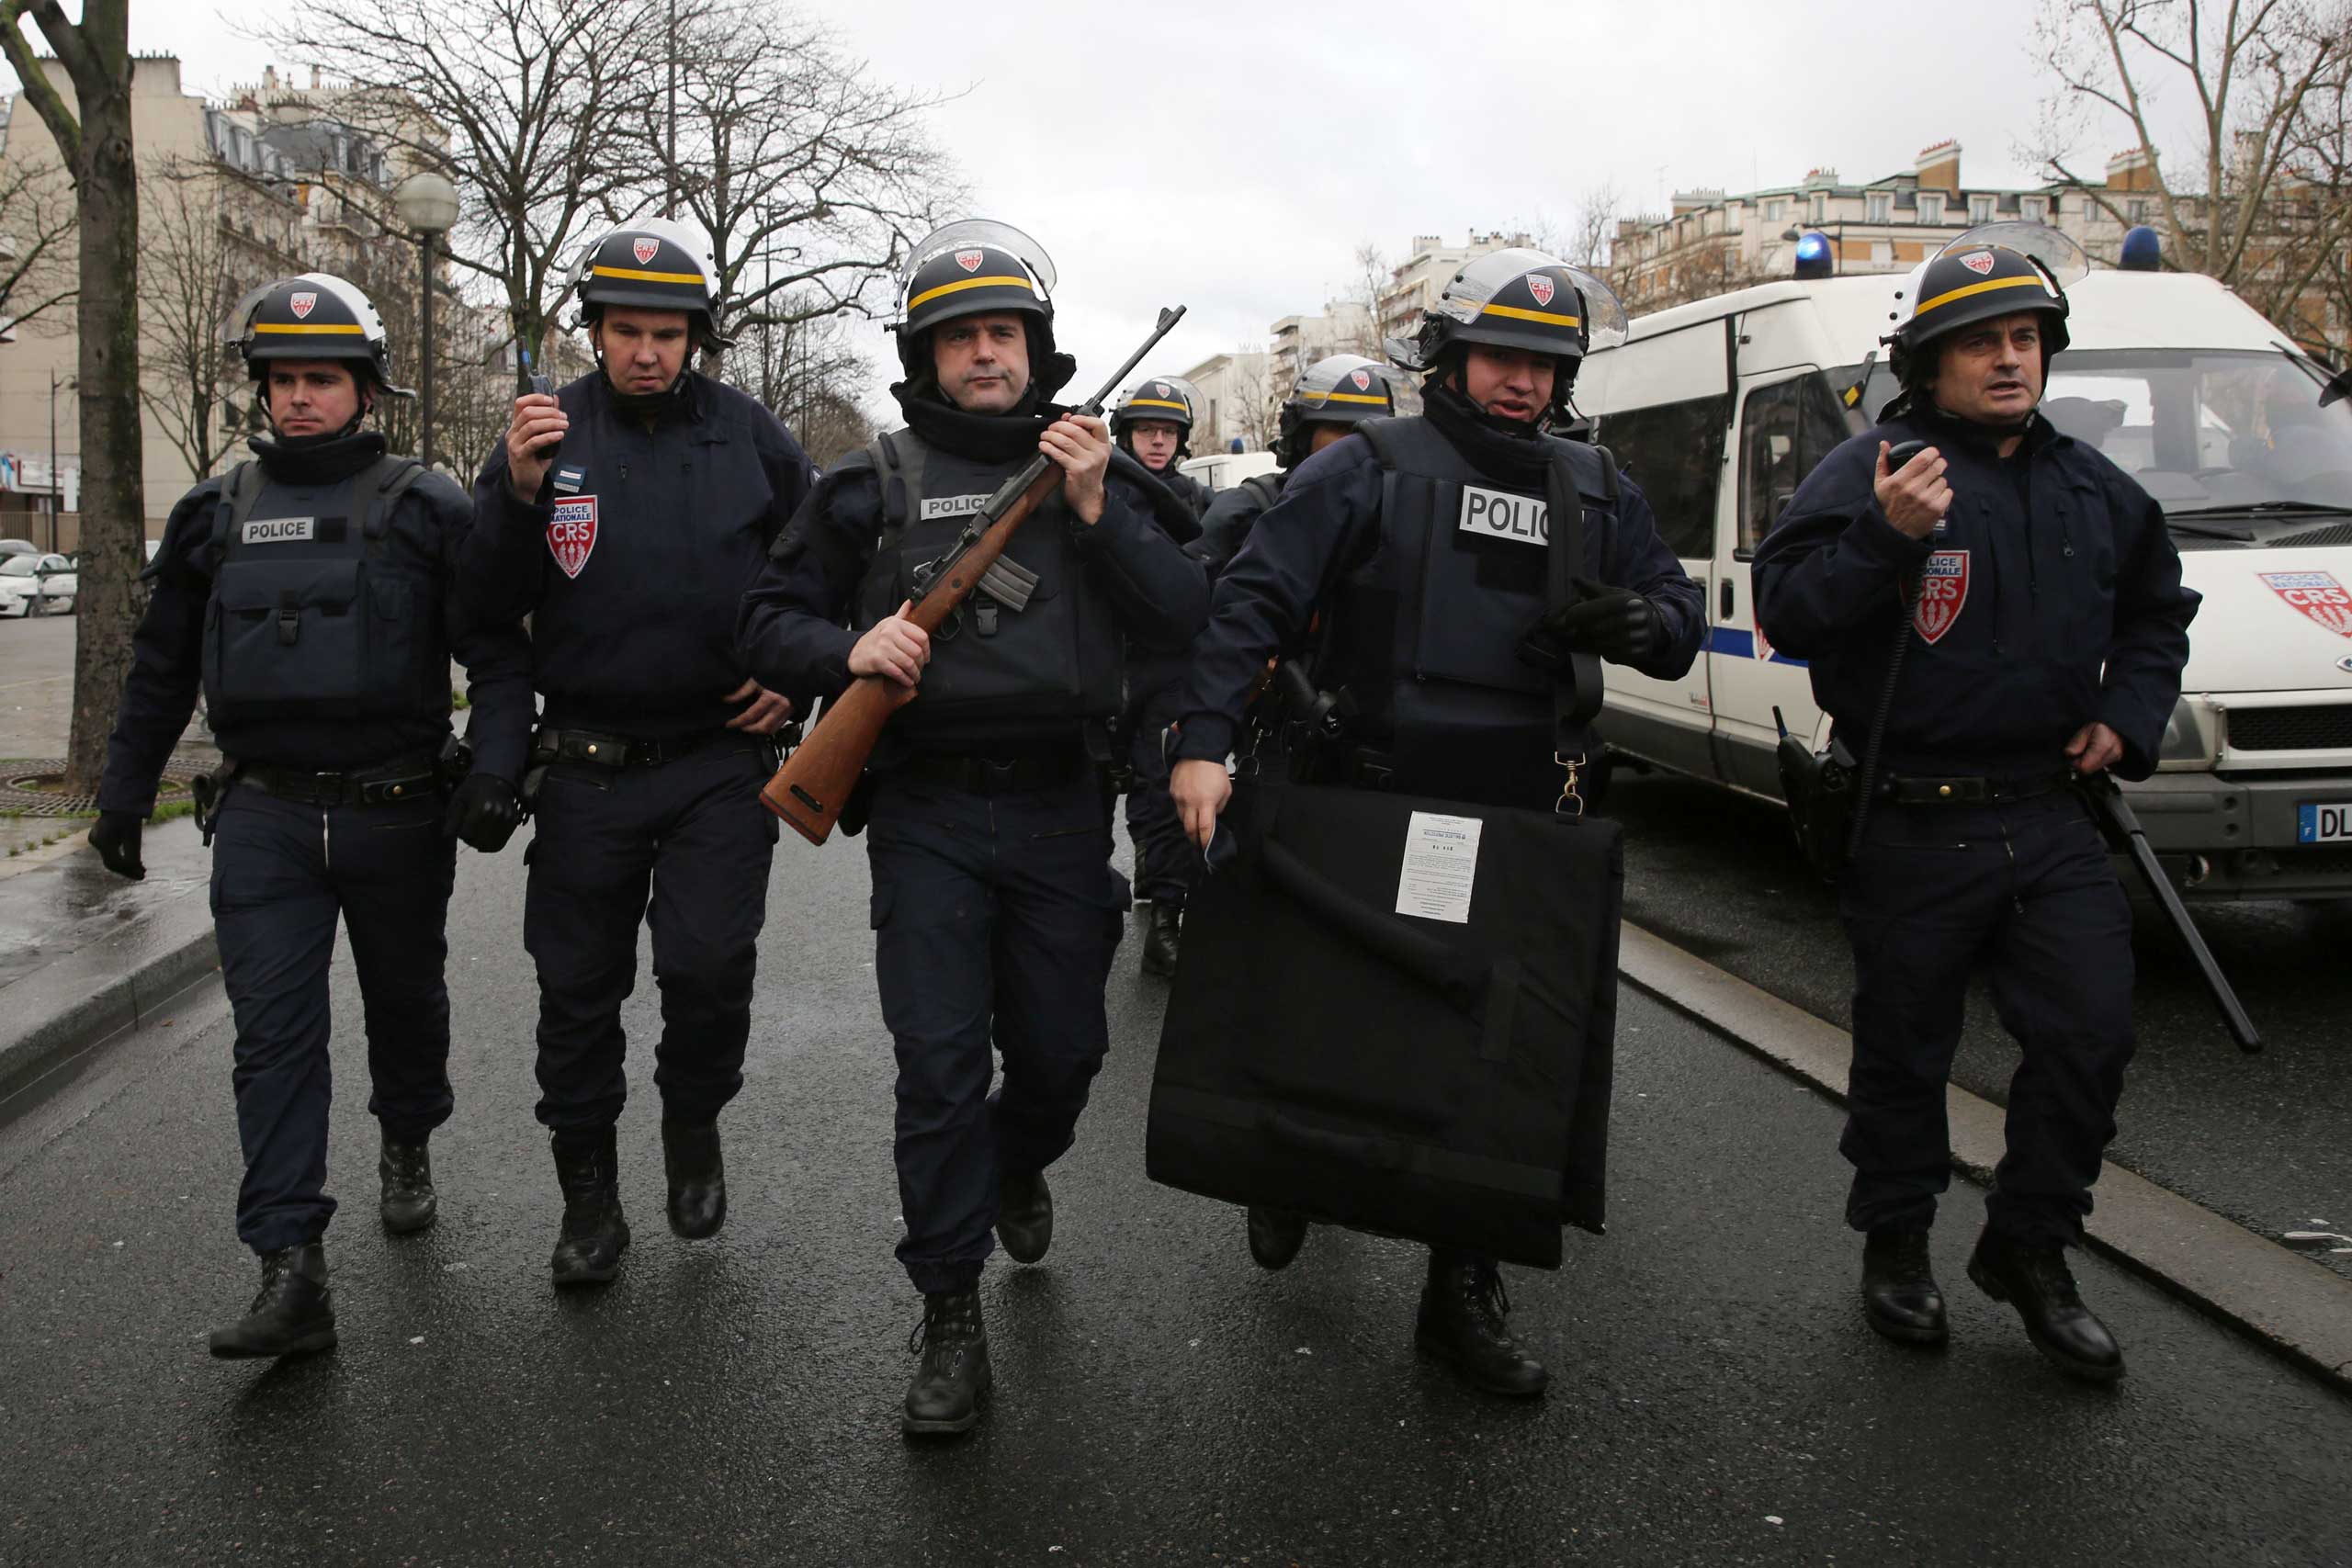 Police arrive with guns at Port de Vincennes on Jan. 9, 2015 in Paris. (Dan Kitwood—Getty Images)